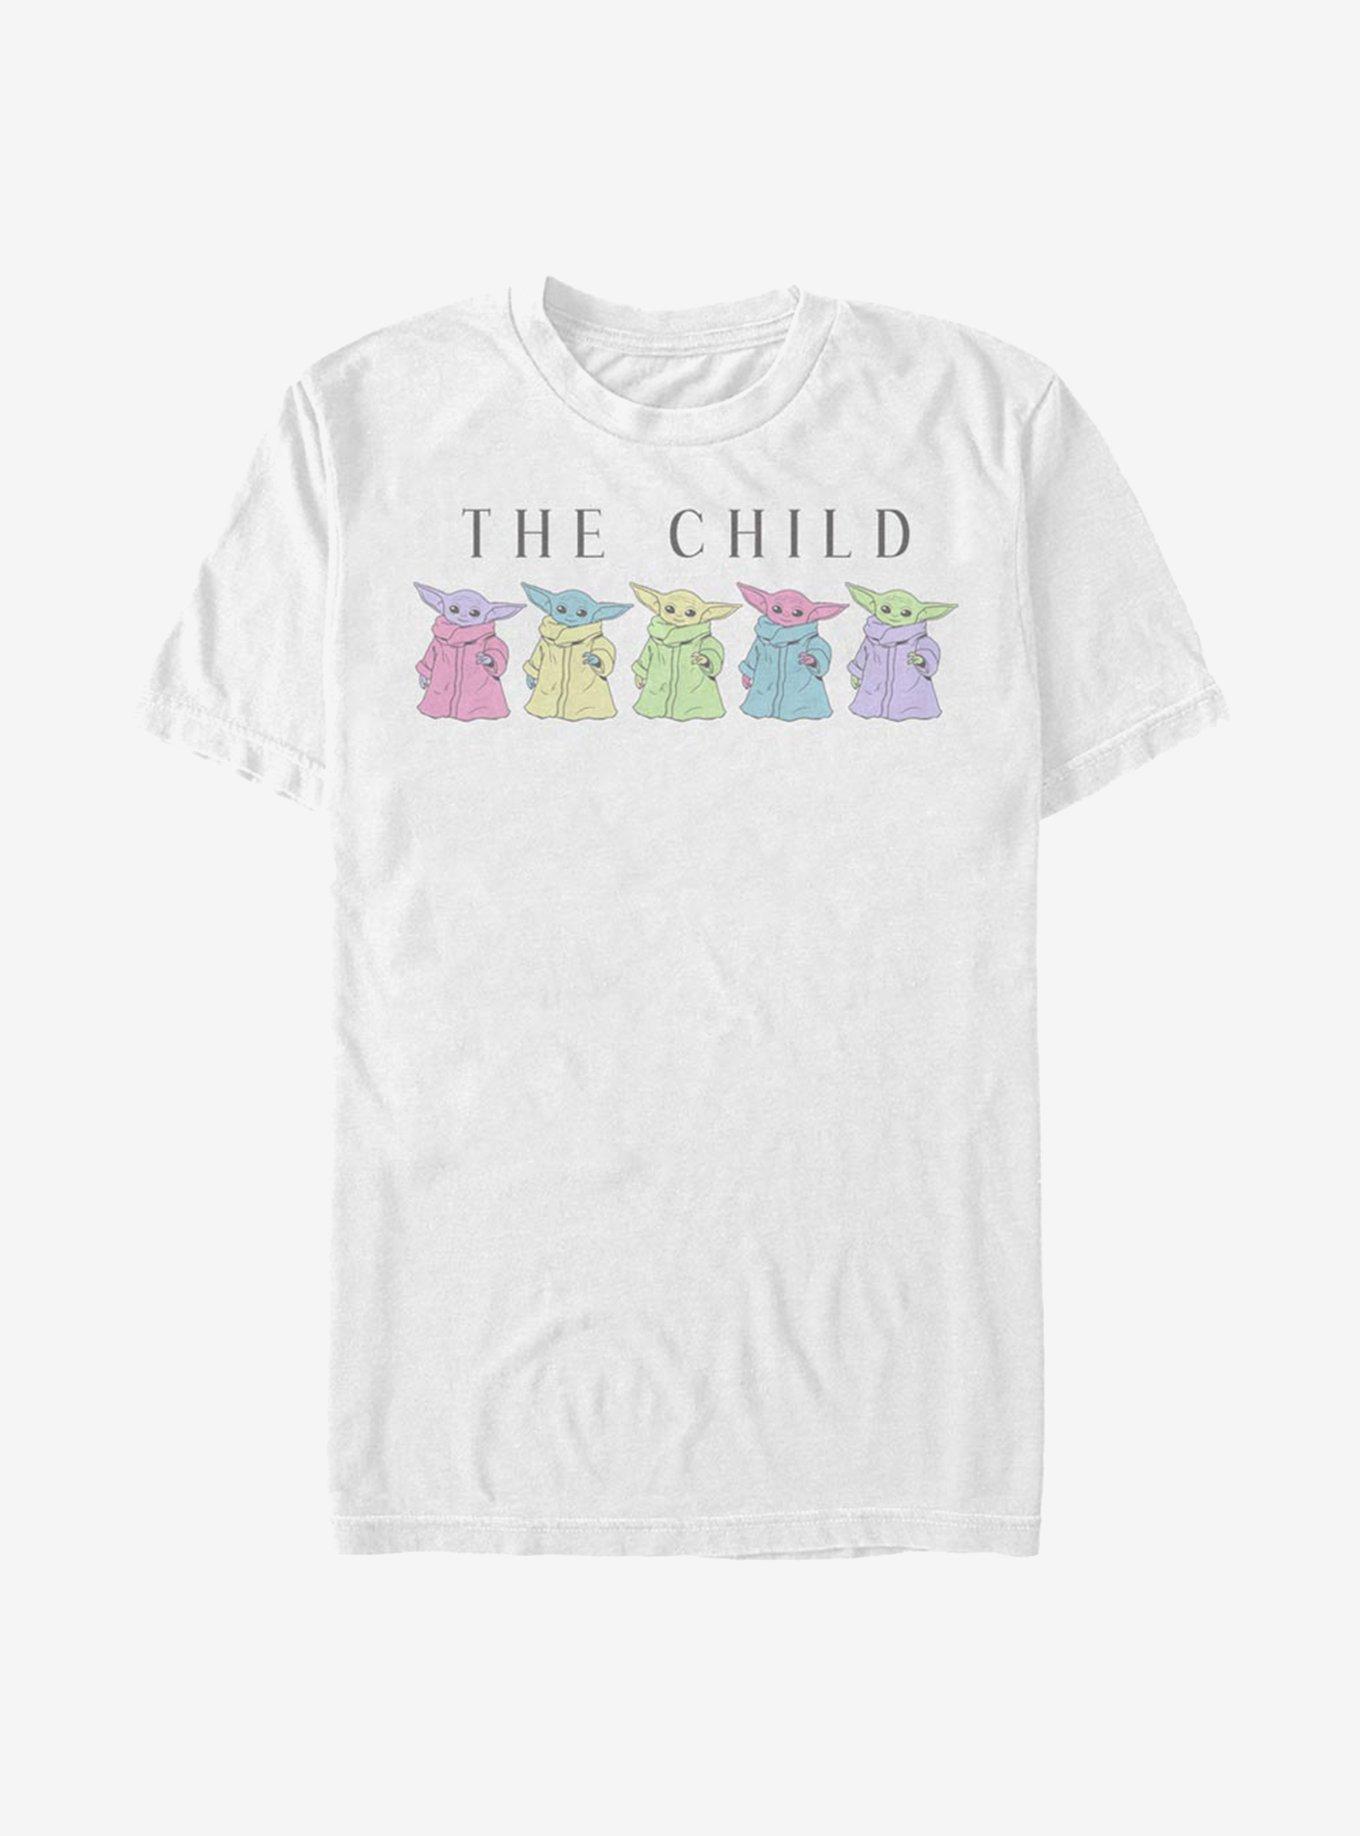 Star Wars The Mandalorian Multicolor The Child T-Shirt, WHITE, hi-res